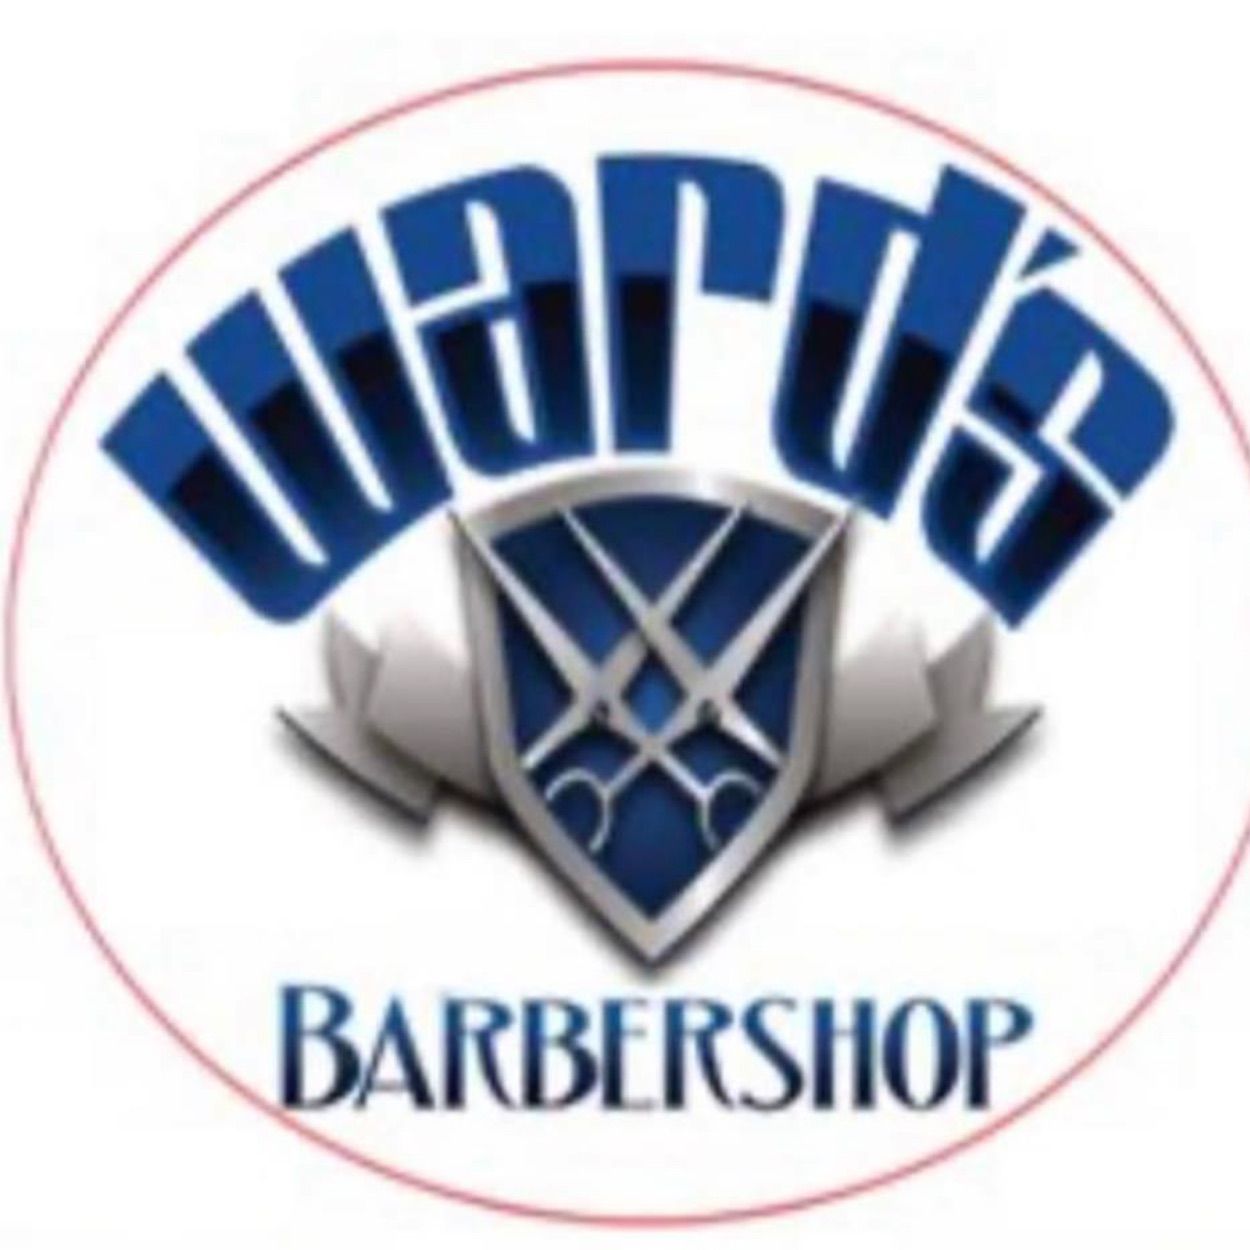 Wards Barbershop, 710 W Main St, Centralia, 98531